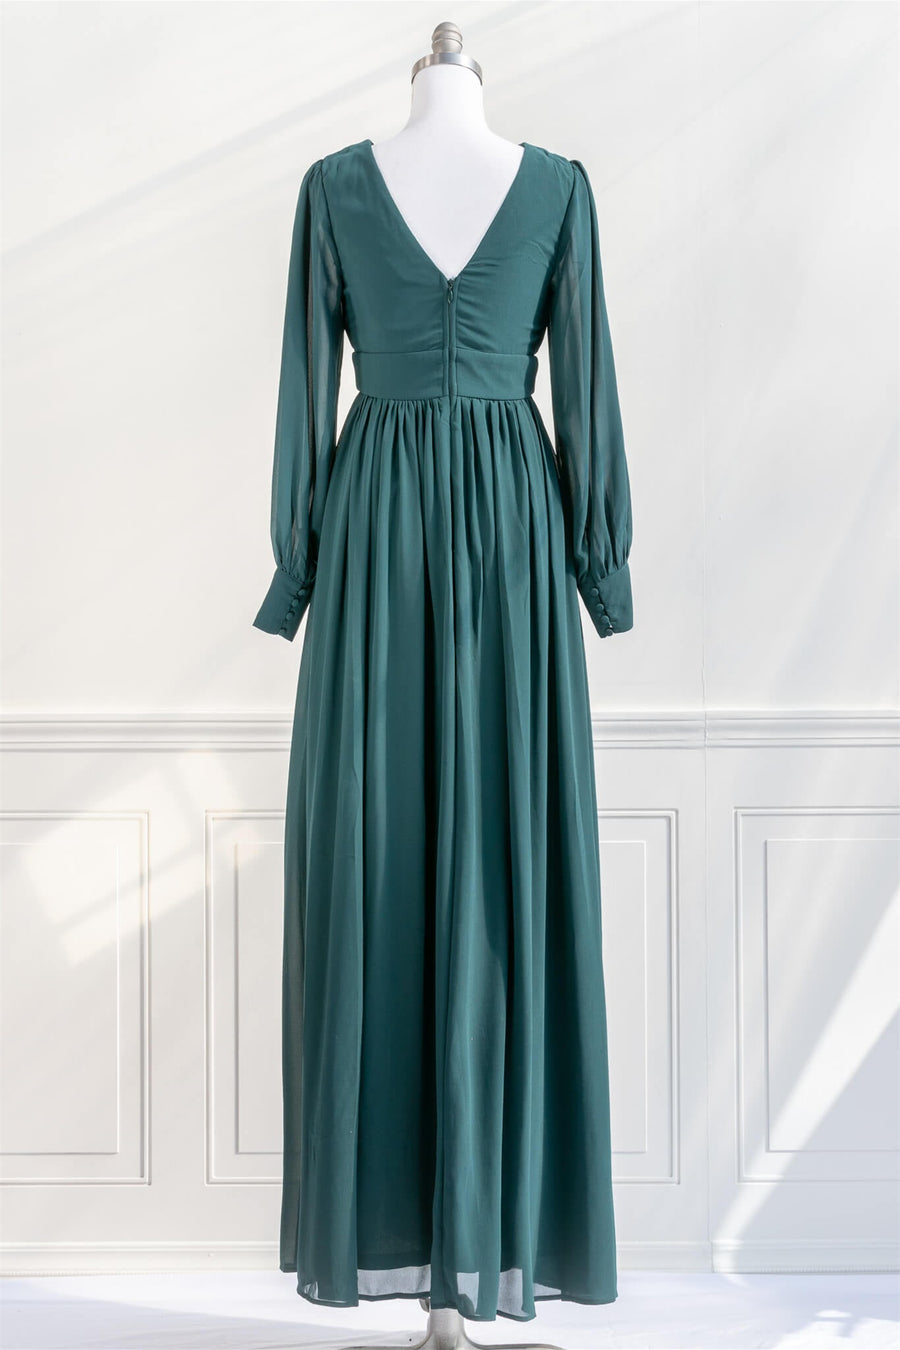 Pine Deep V Neck Long Sleeves Empire Chiffon Long Prom Dress